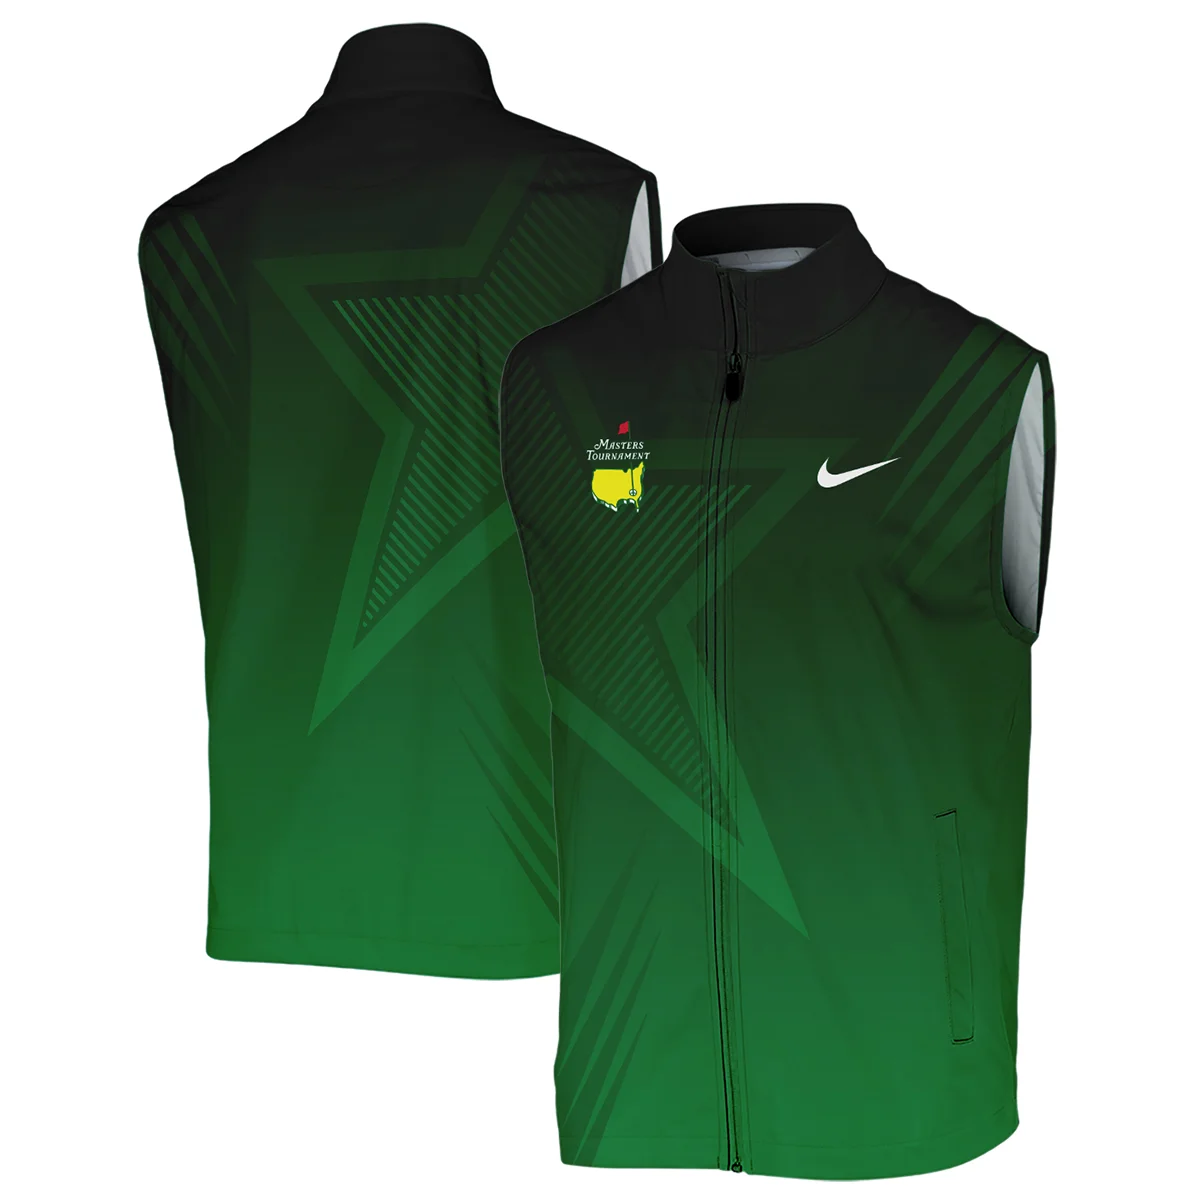 Nike Masters Tournament Polo Shirt Dark Green Gradient Star Pattern Golf Sports Sleeveless Jacket Style Classic Sleeveless Jacket